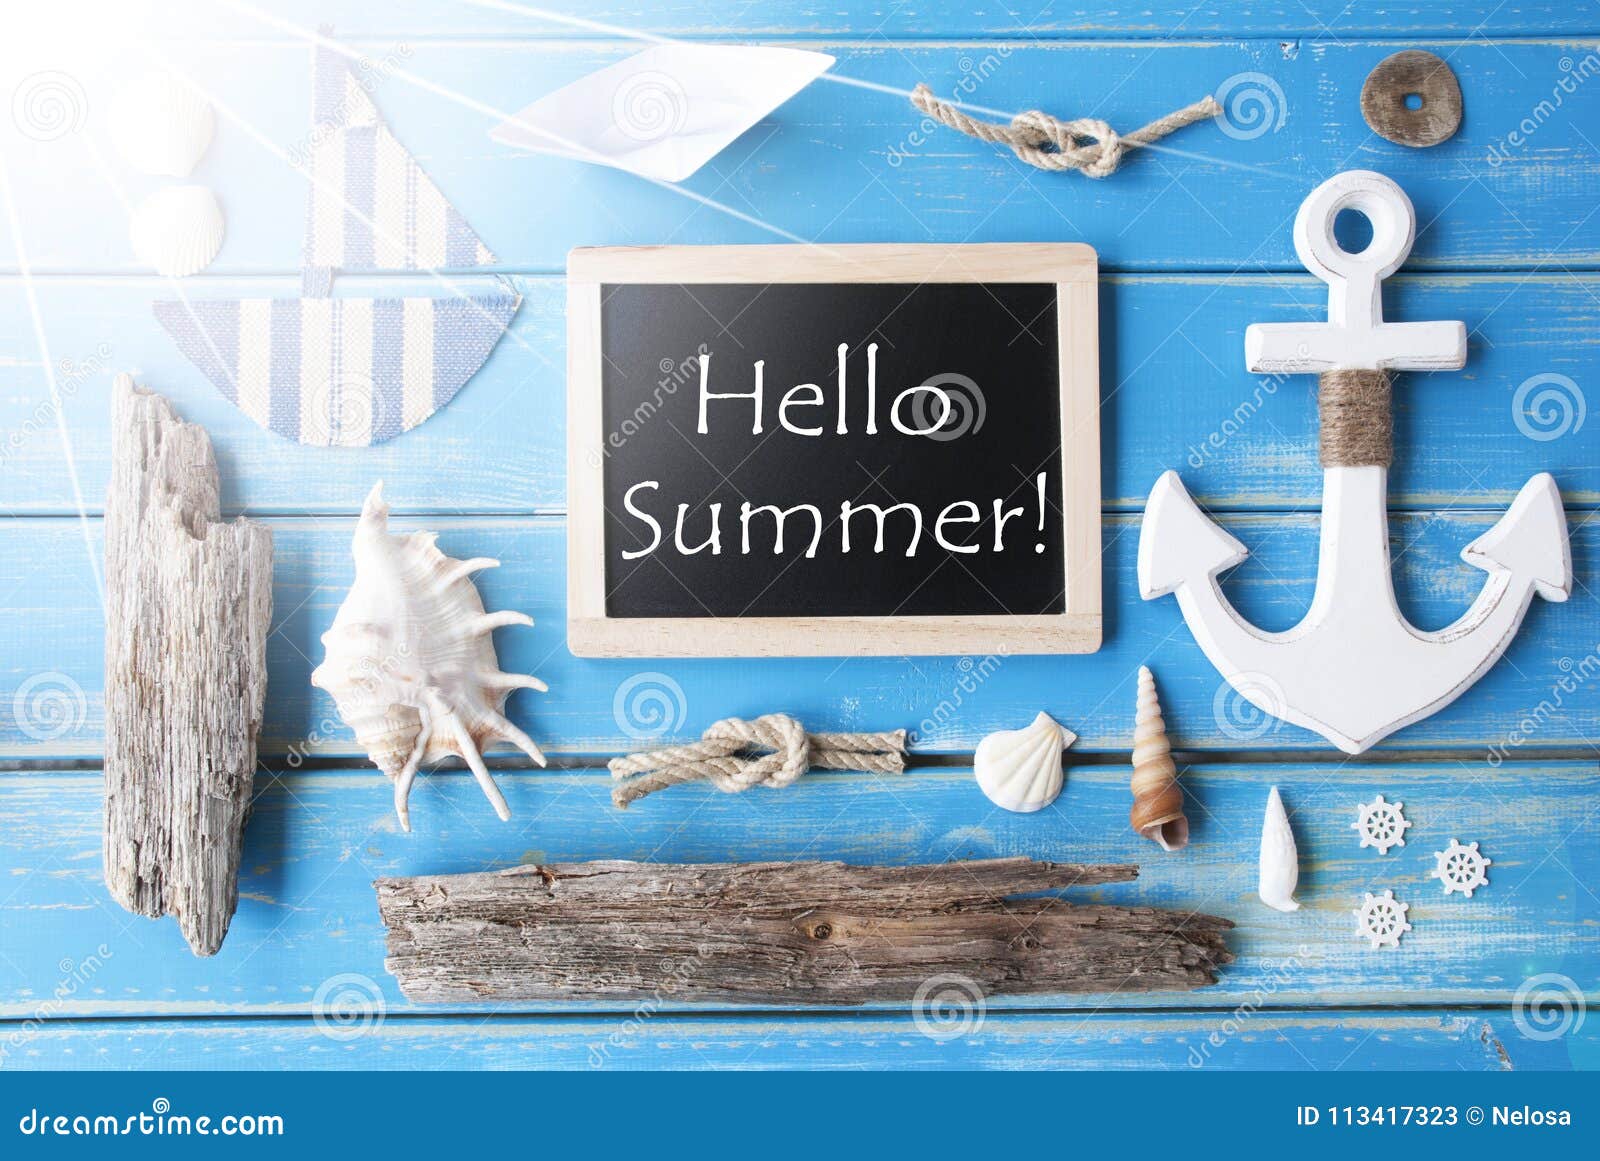 sunny nautic chalkboard and text hello summer